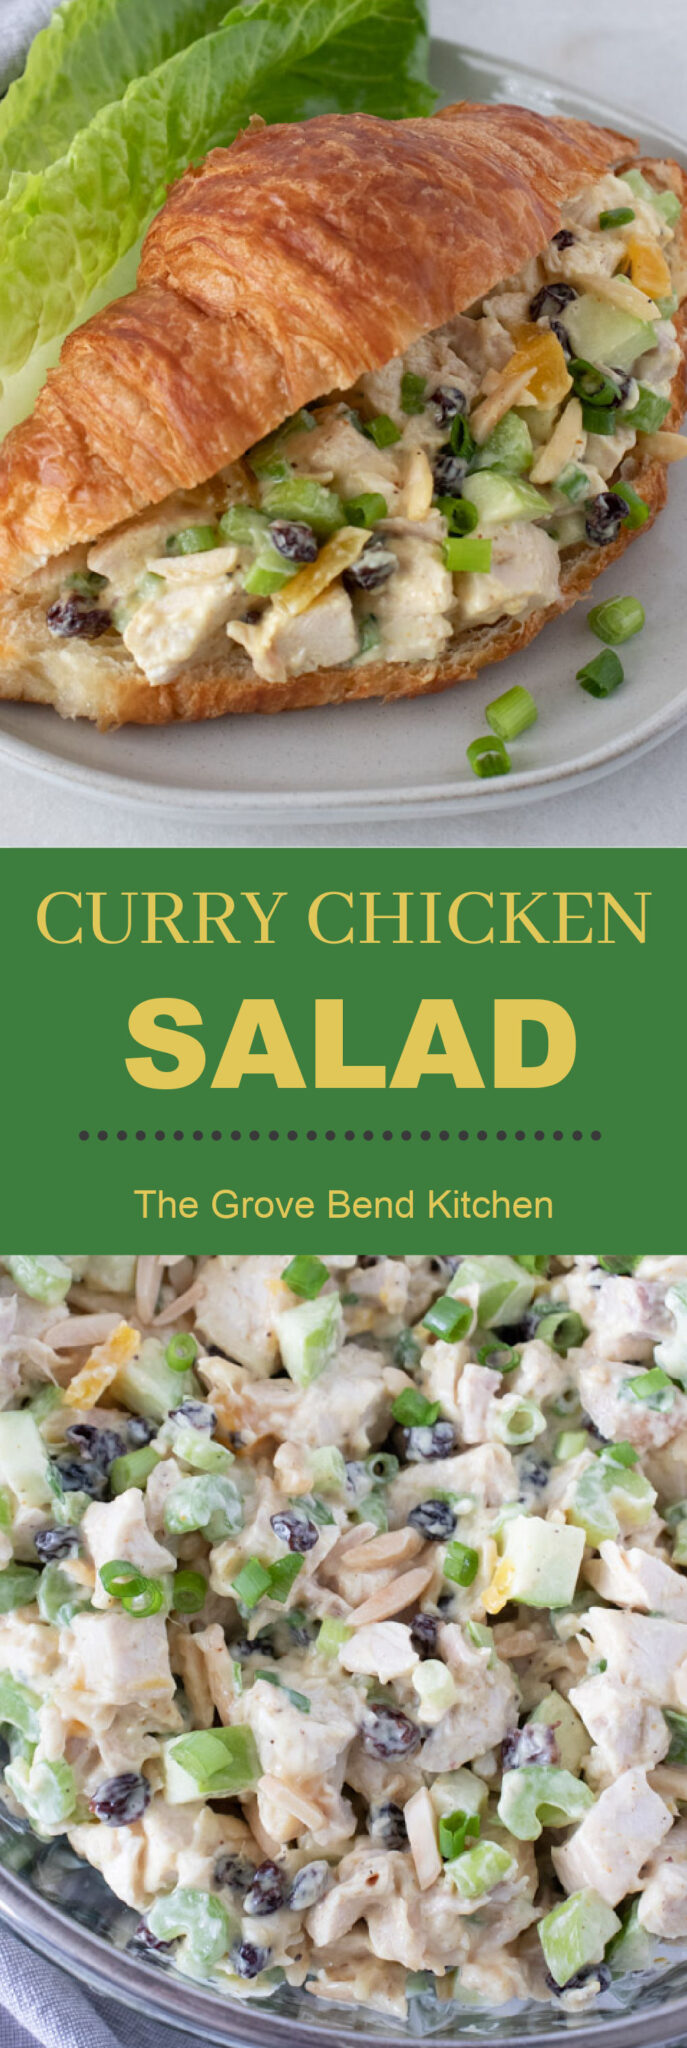 Curry Chicken Salad - The Grove Bend Kitchen